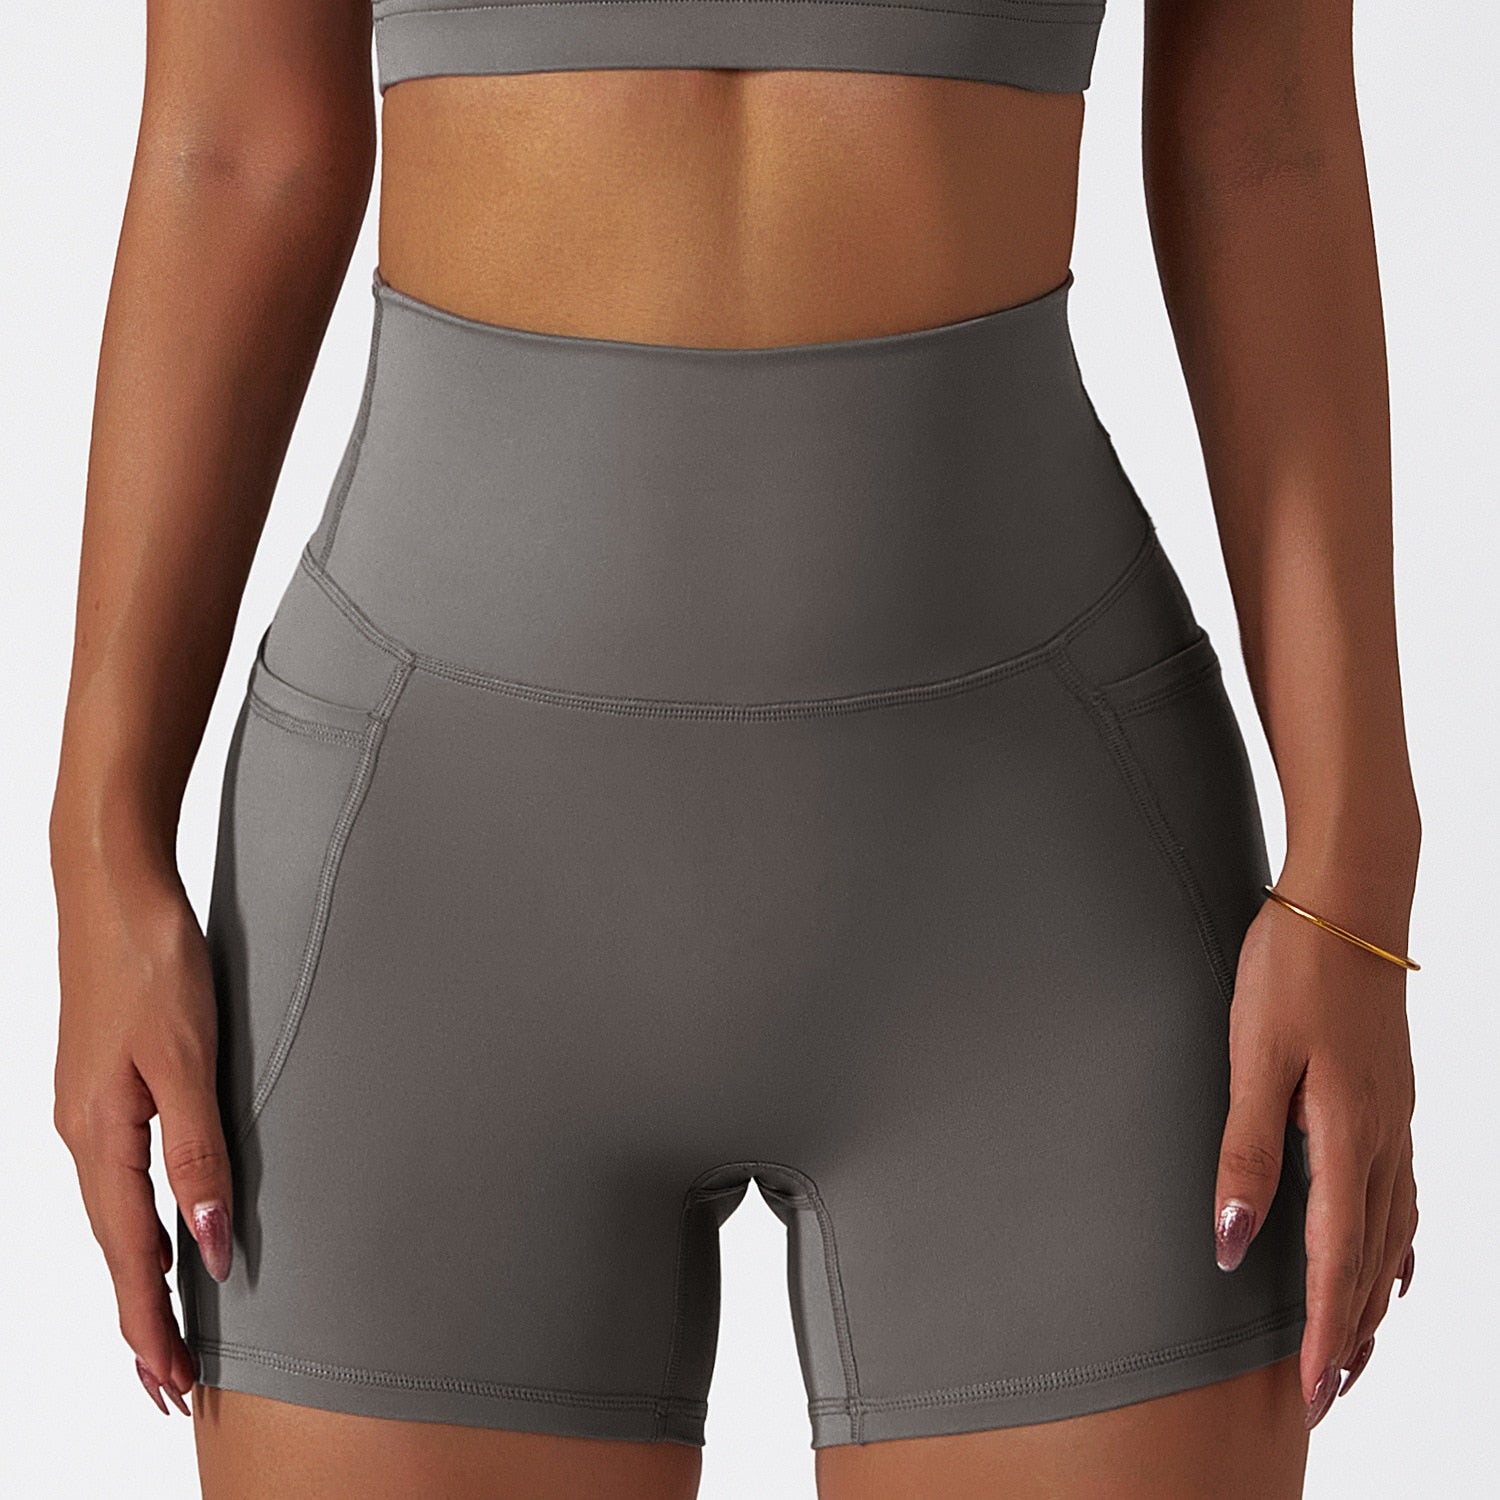 Acheter gray Comfortable Skin Friendly High Waist Yoga Shorts